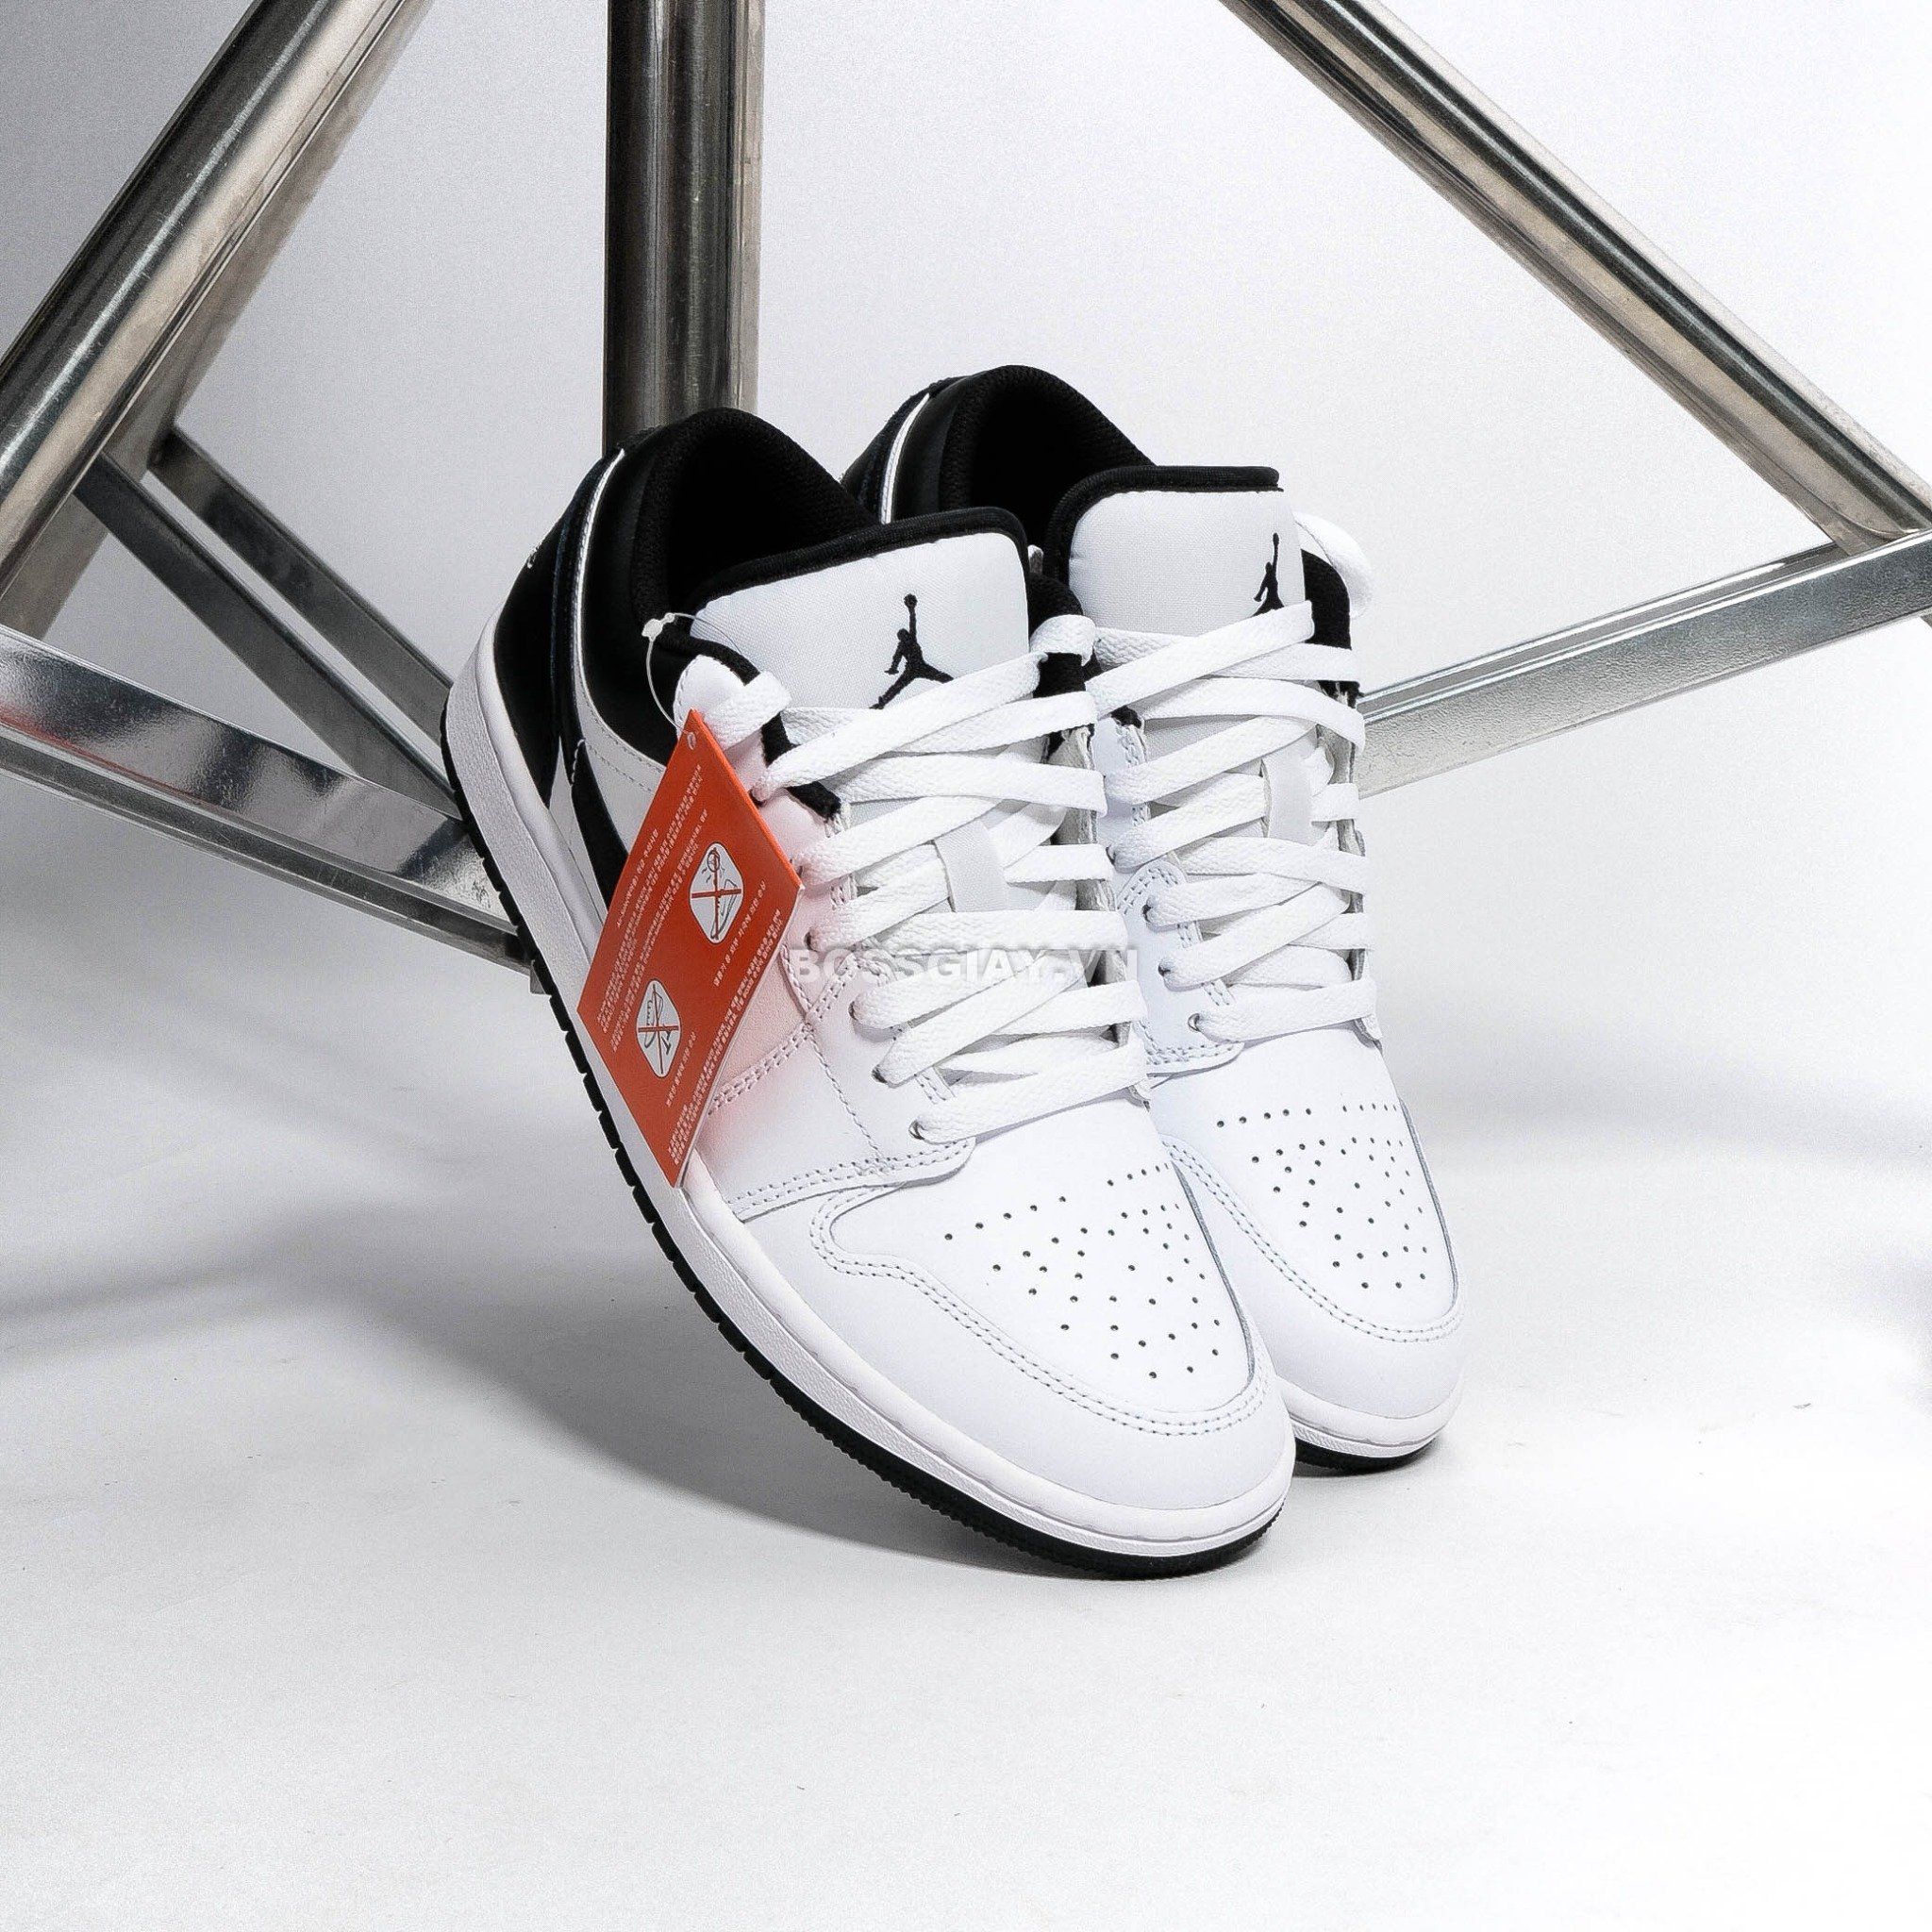  Nike Air Jordan 1 Low Reverse Panda  553558-132 